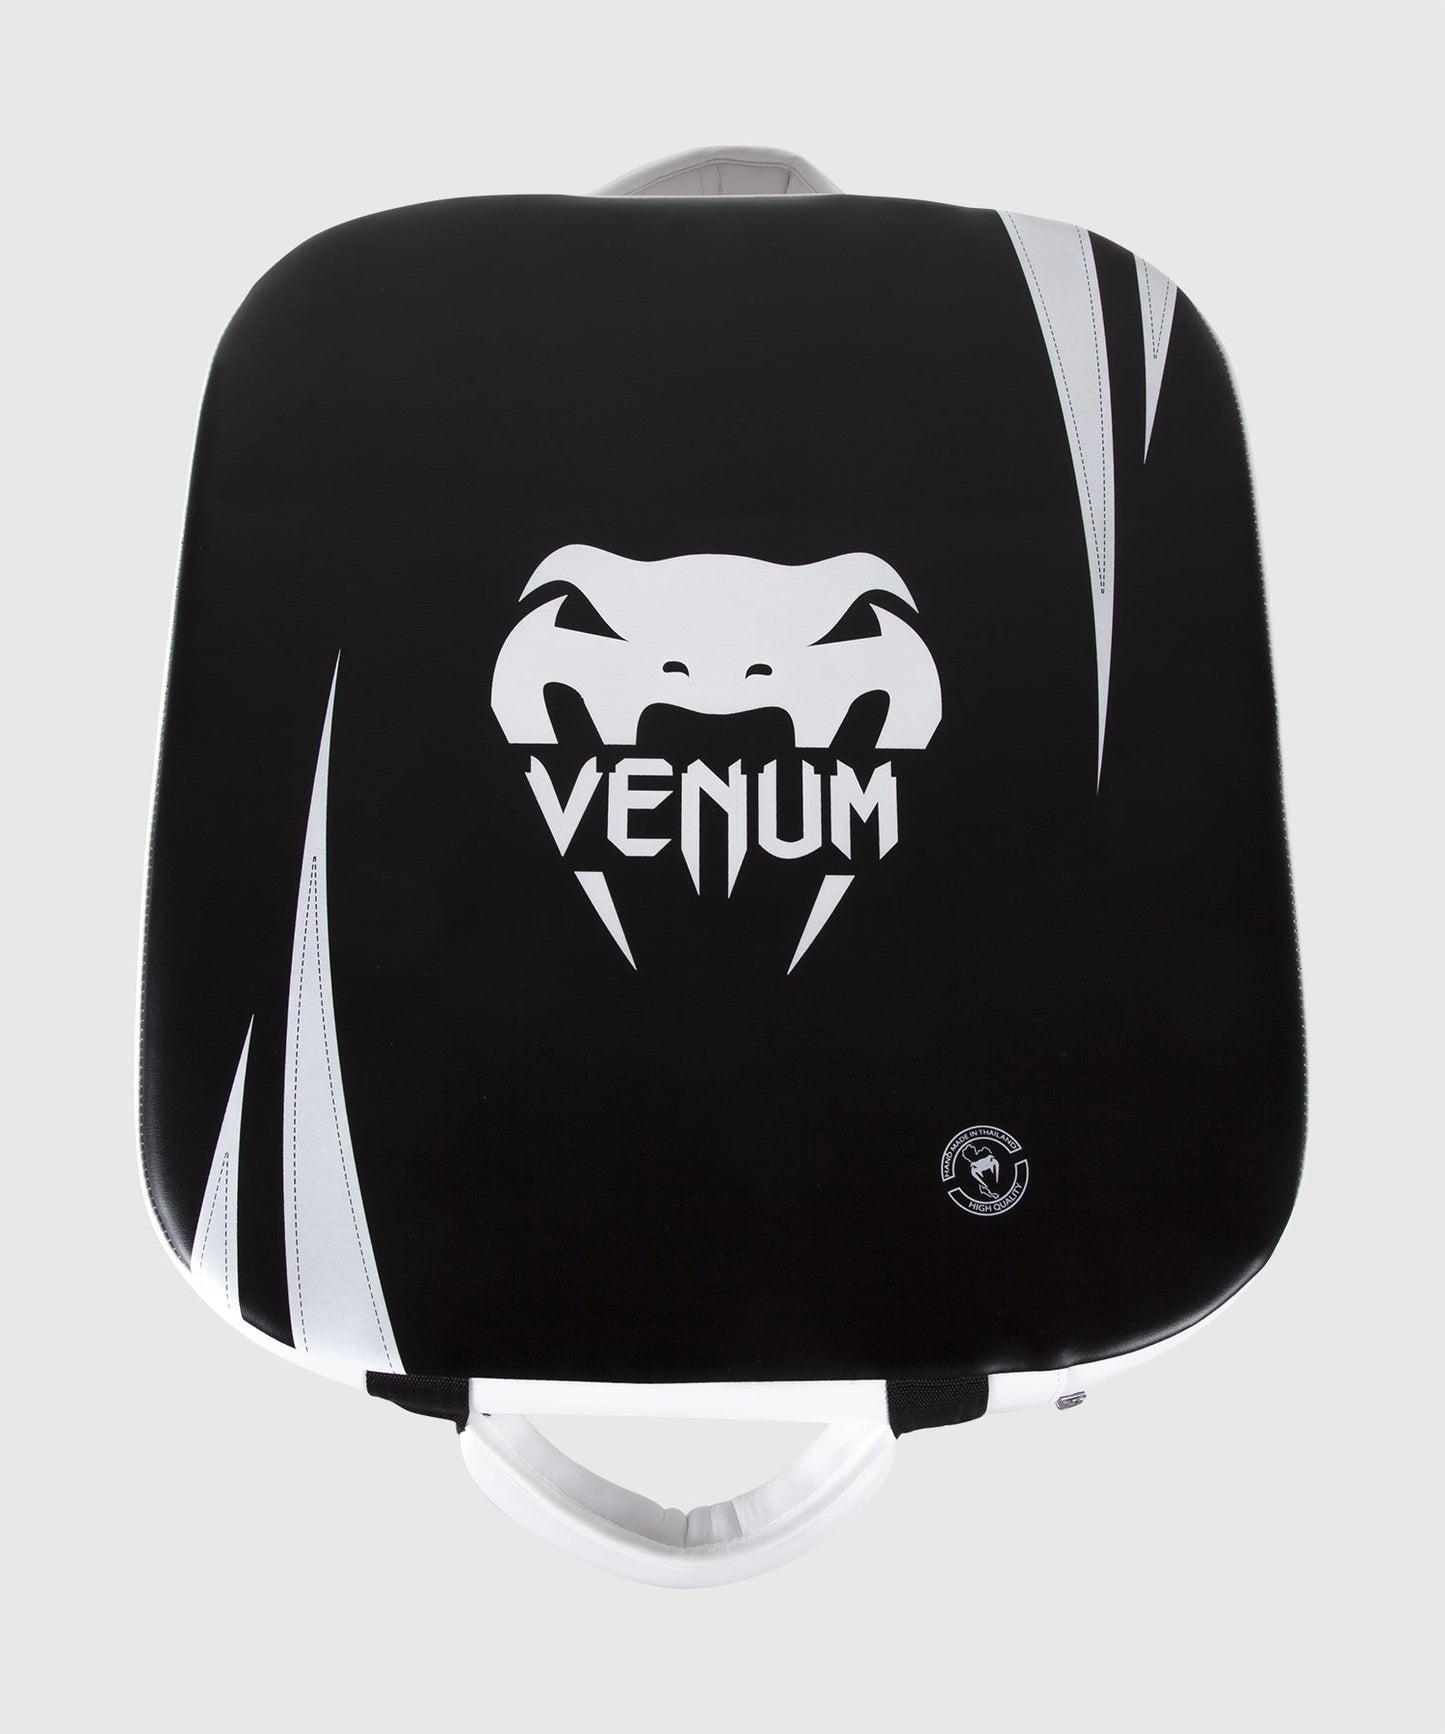 Venum Absolute Square Kick Shield - Skintex Leather - Black/Ice